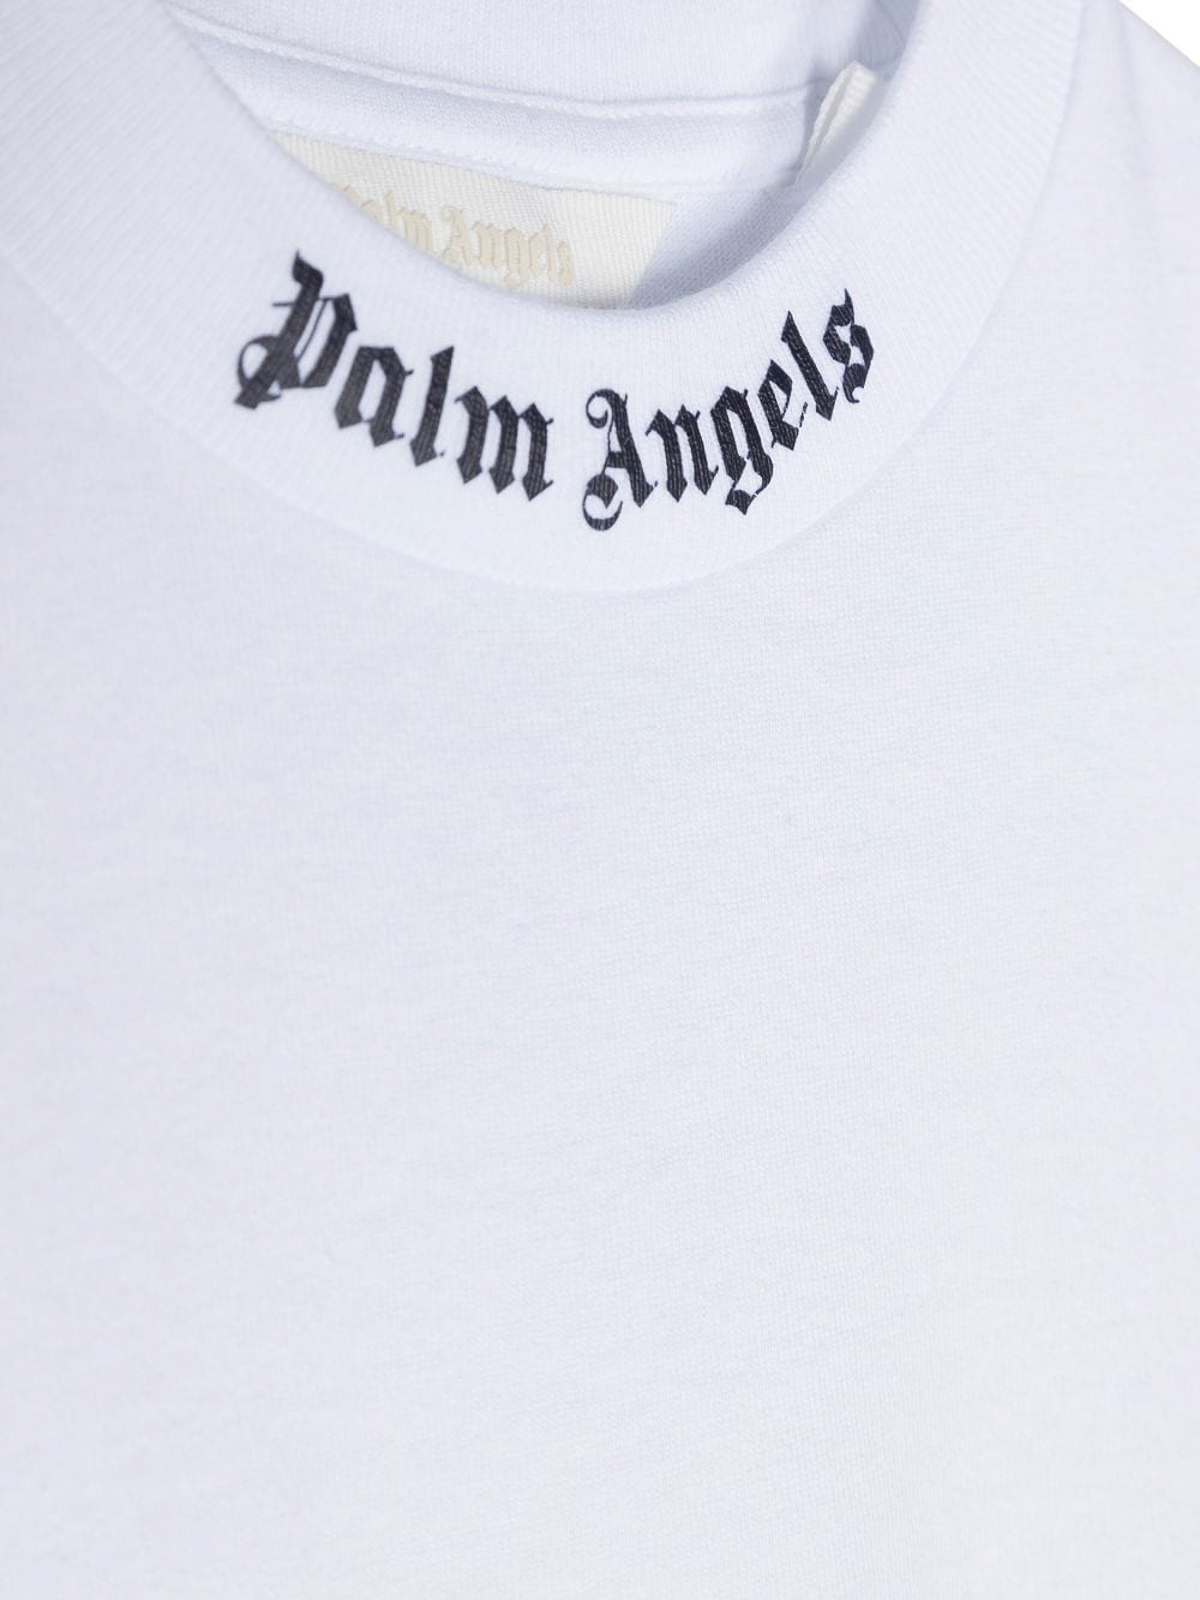 Camiseta Palm Angel